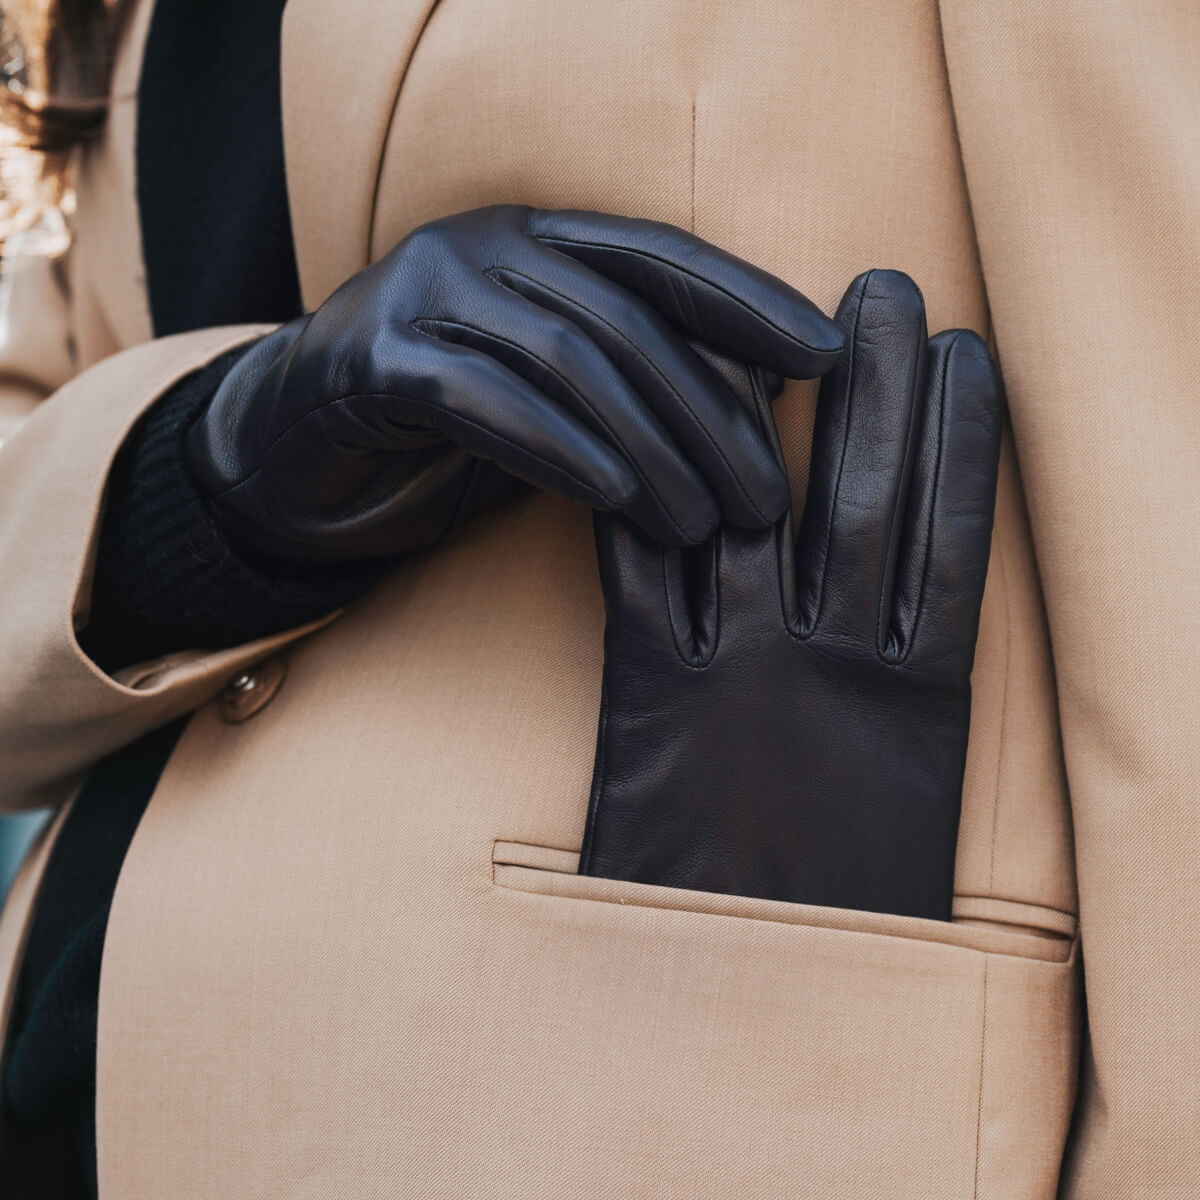 Leren Handschoenen Dames Zwart - Touchscreen - Gemaakt in Italië – Luxe Leren Handschoenen – Handgemaakt in Italië – Fratelli Orsini® - 7